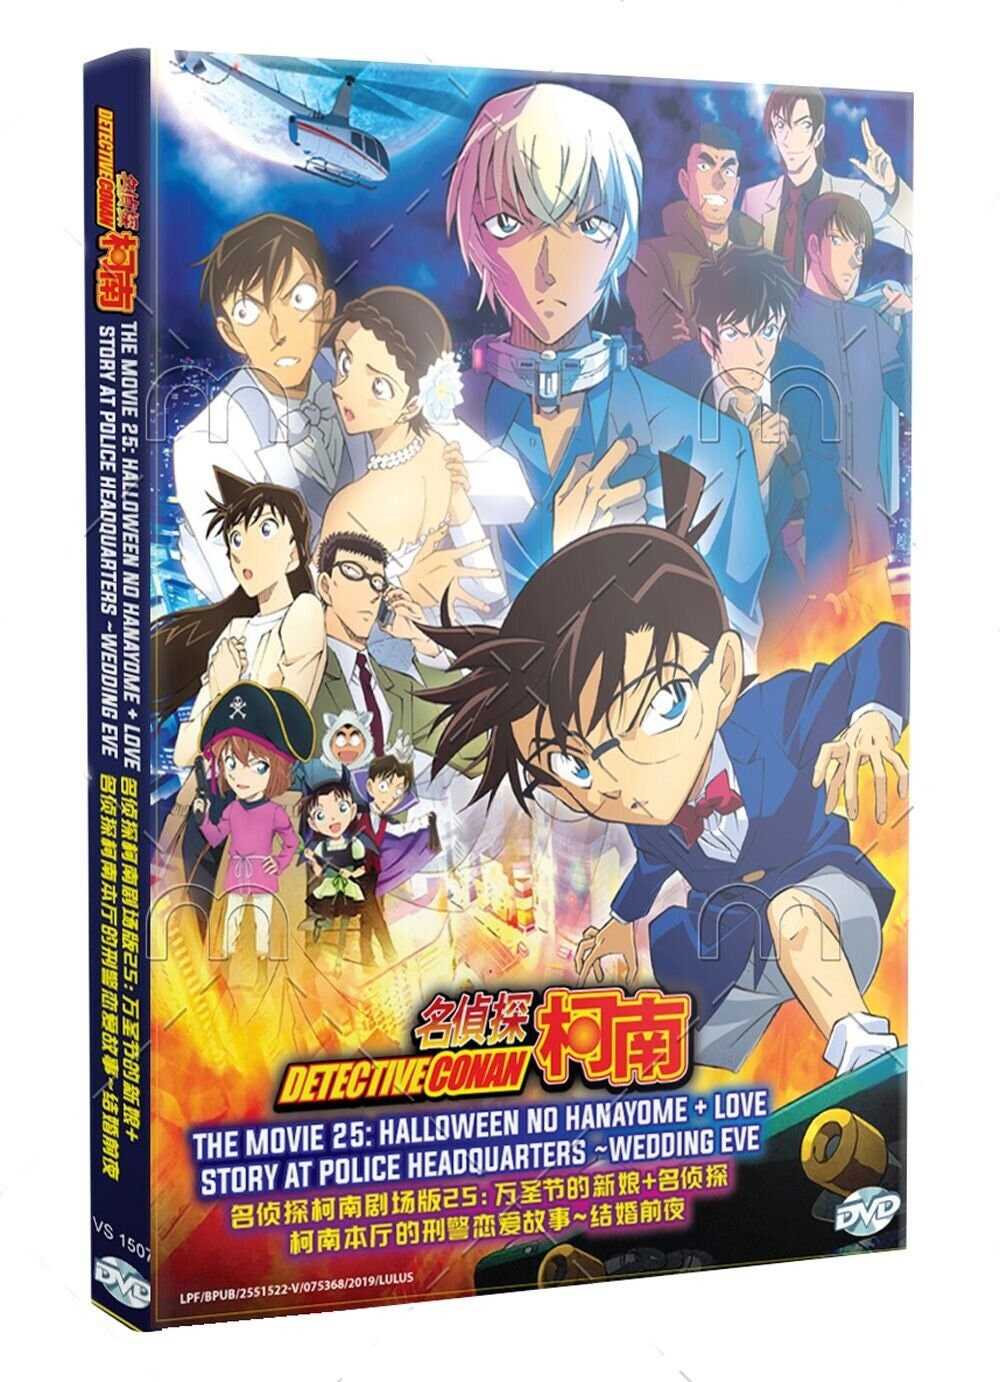 DVD Anime - Go-toubun No Hanayome The Movie English Subtitle Manga Japanese